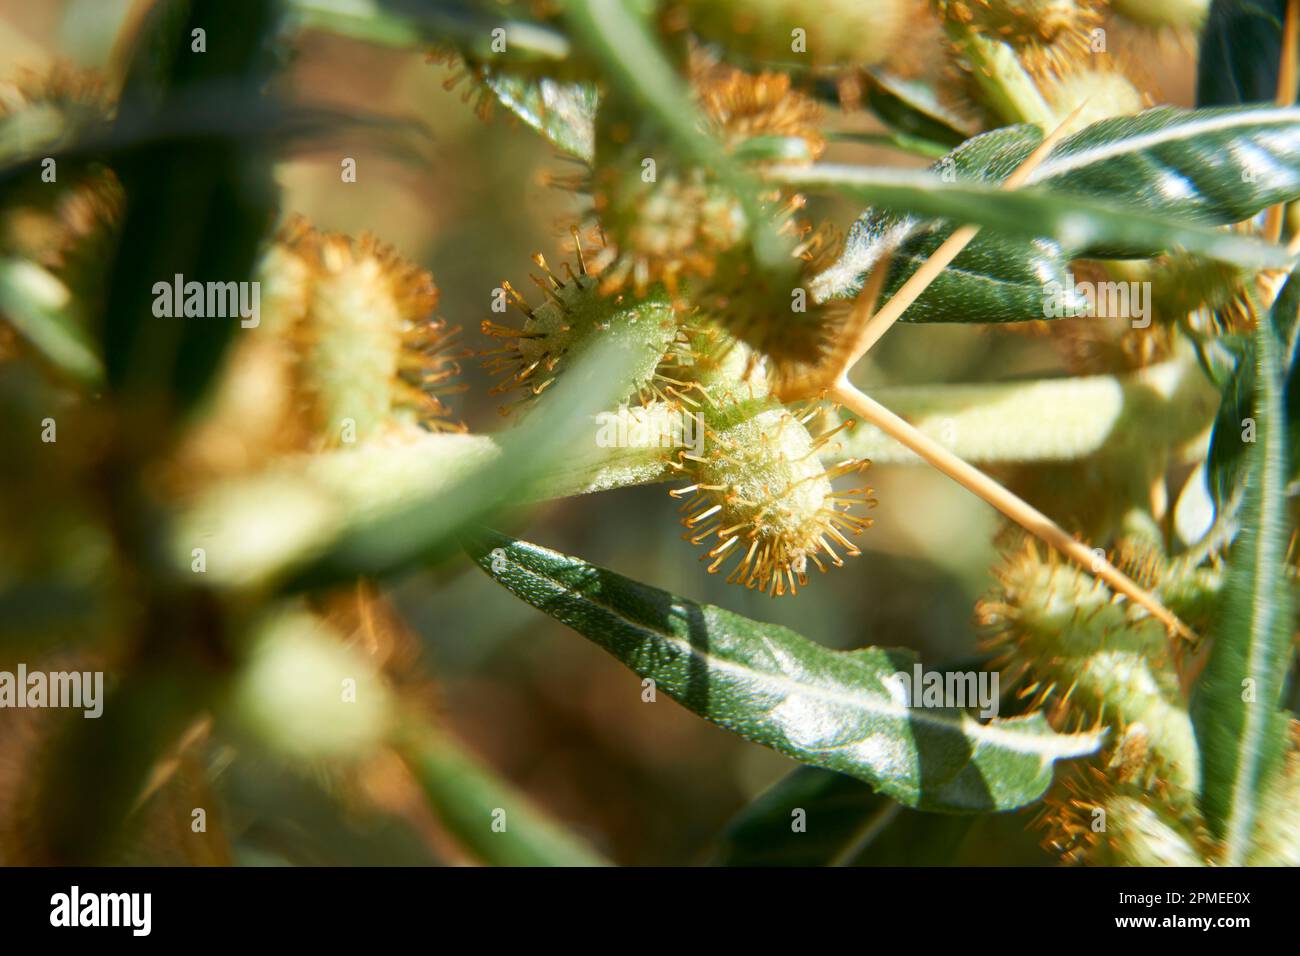 Imágenes macro de Bathurst Burr o Xanthium spinosum una plaga de maleza invasiva introducida. Foto de stock